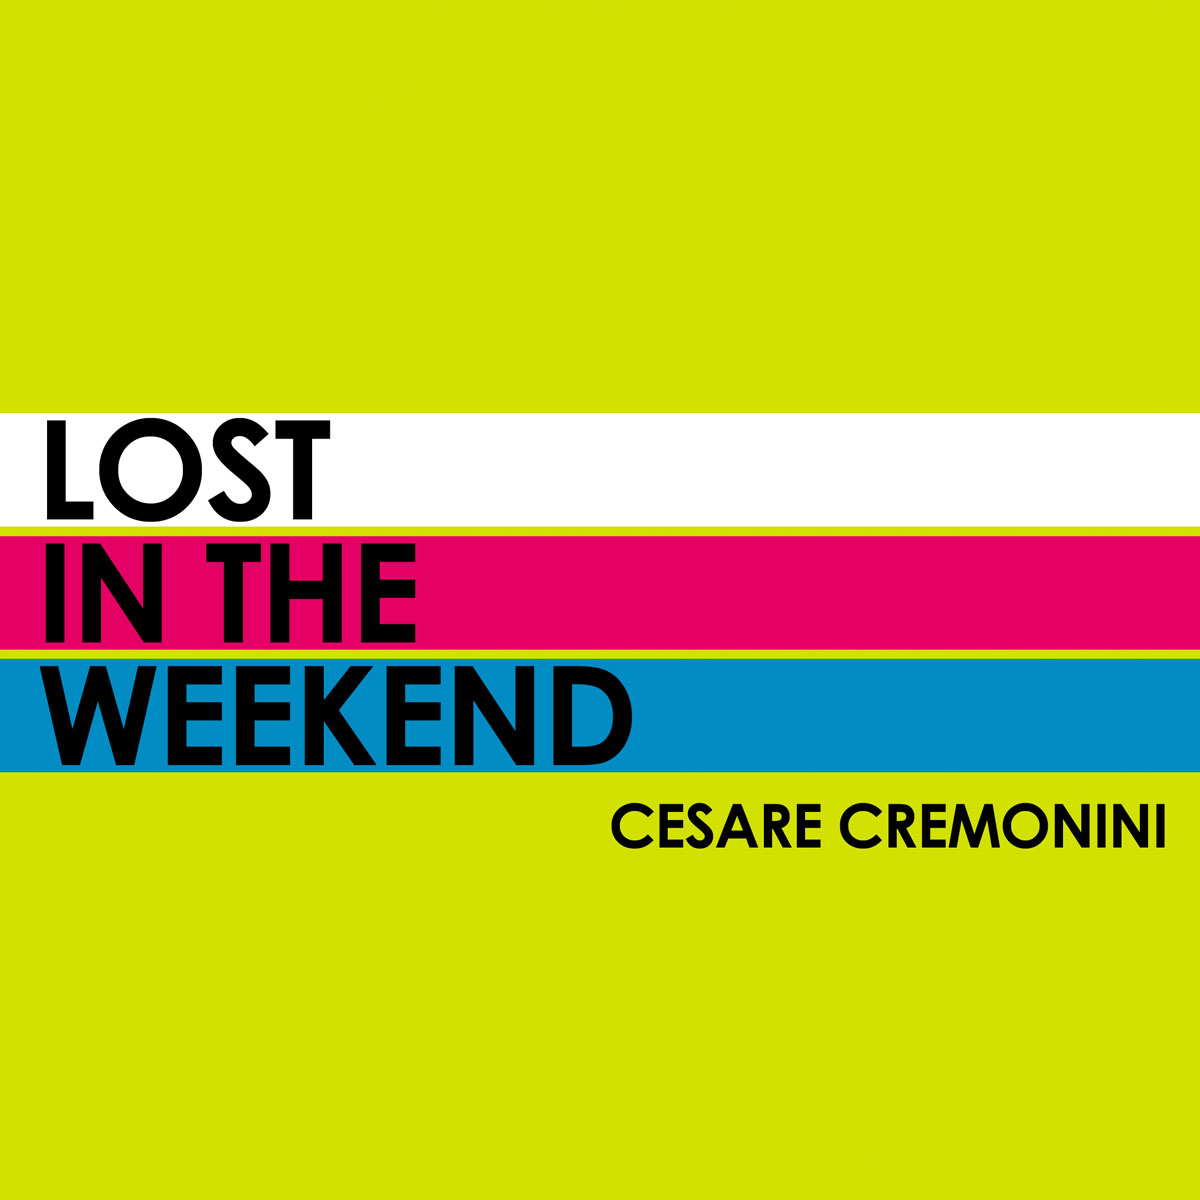 Cesare Cremonini - Lost in the weekend - Design Umberto Angelini e stupida - Design Umberto Angelini